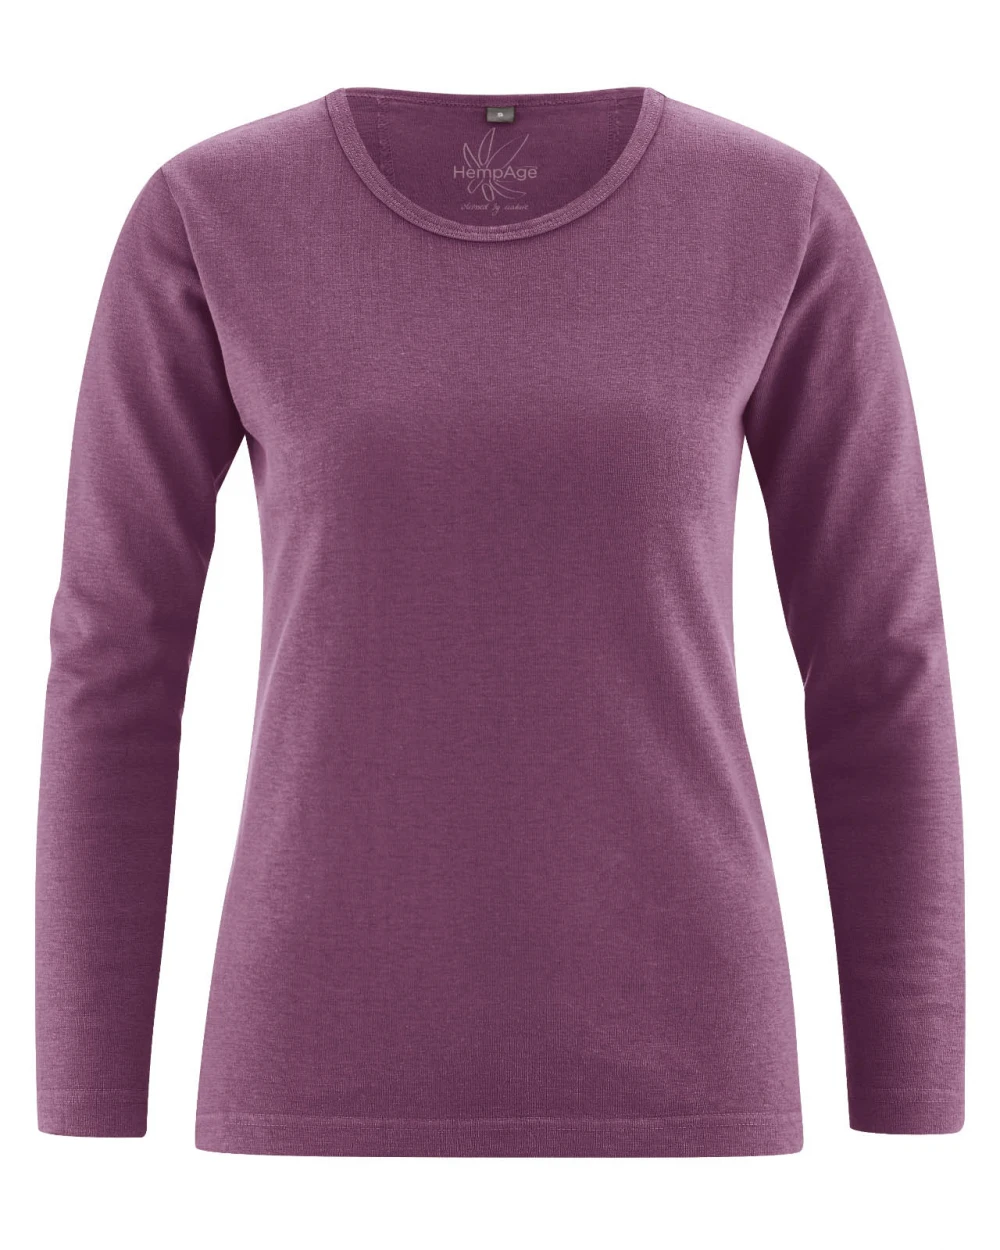 Basic shirt for women in hemp and organic cotton